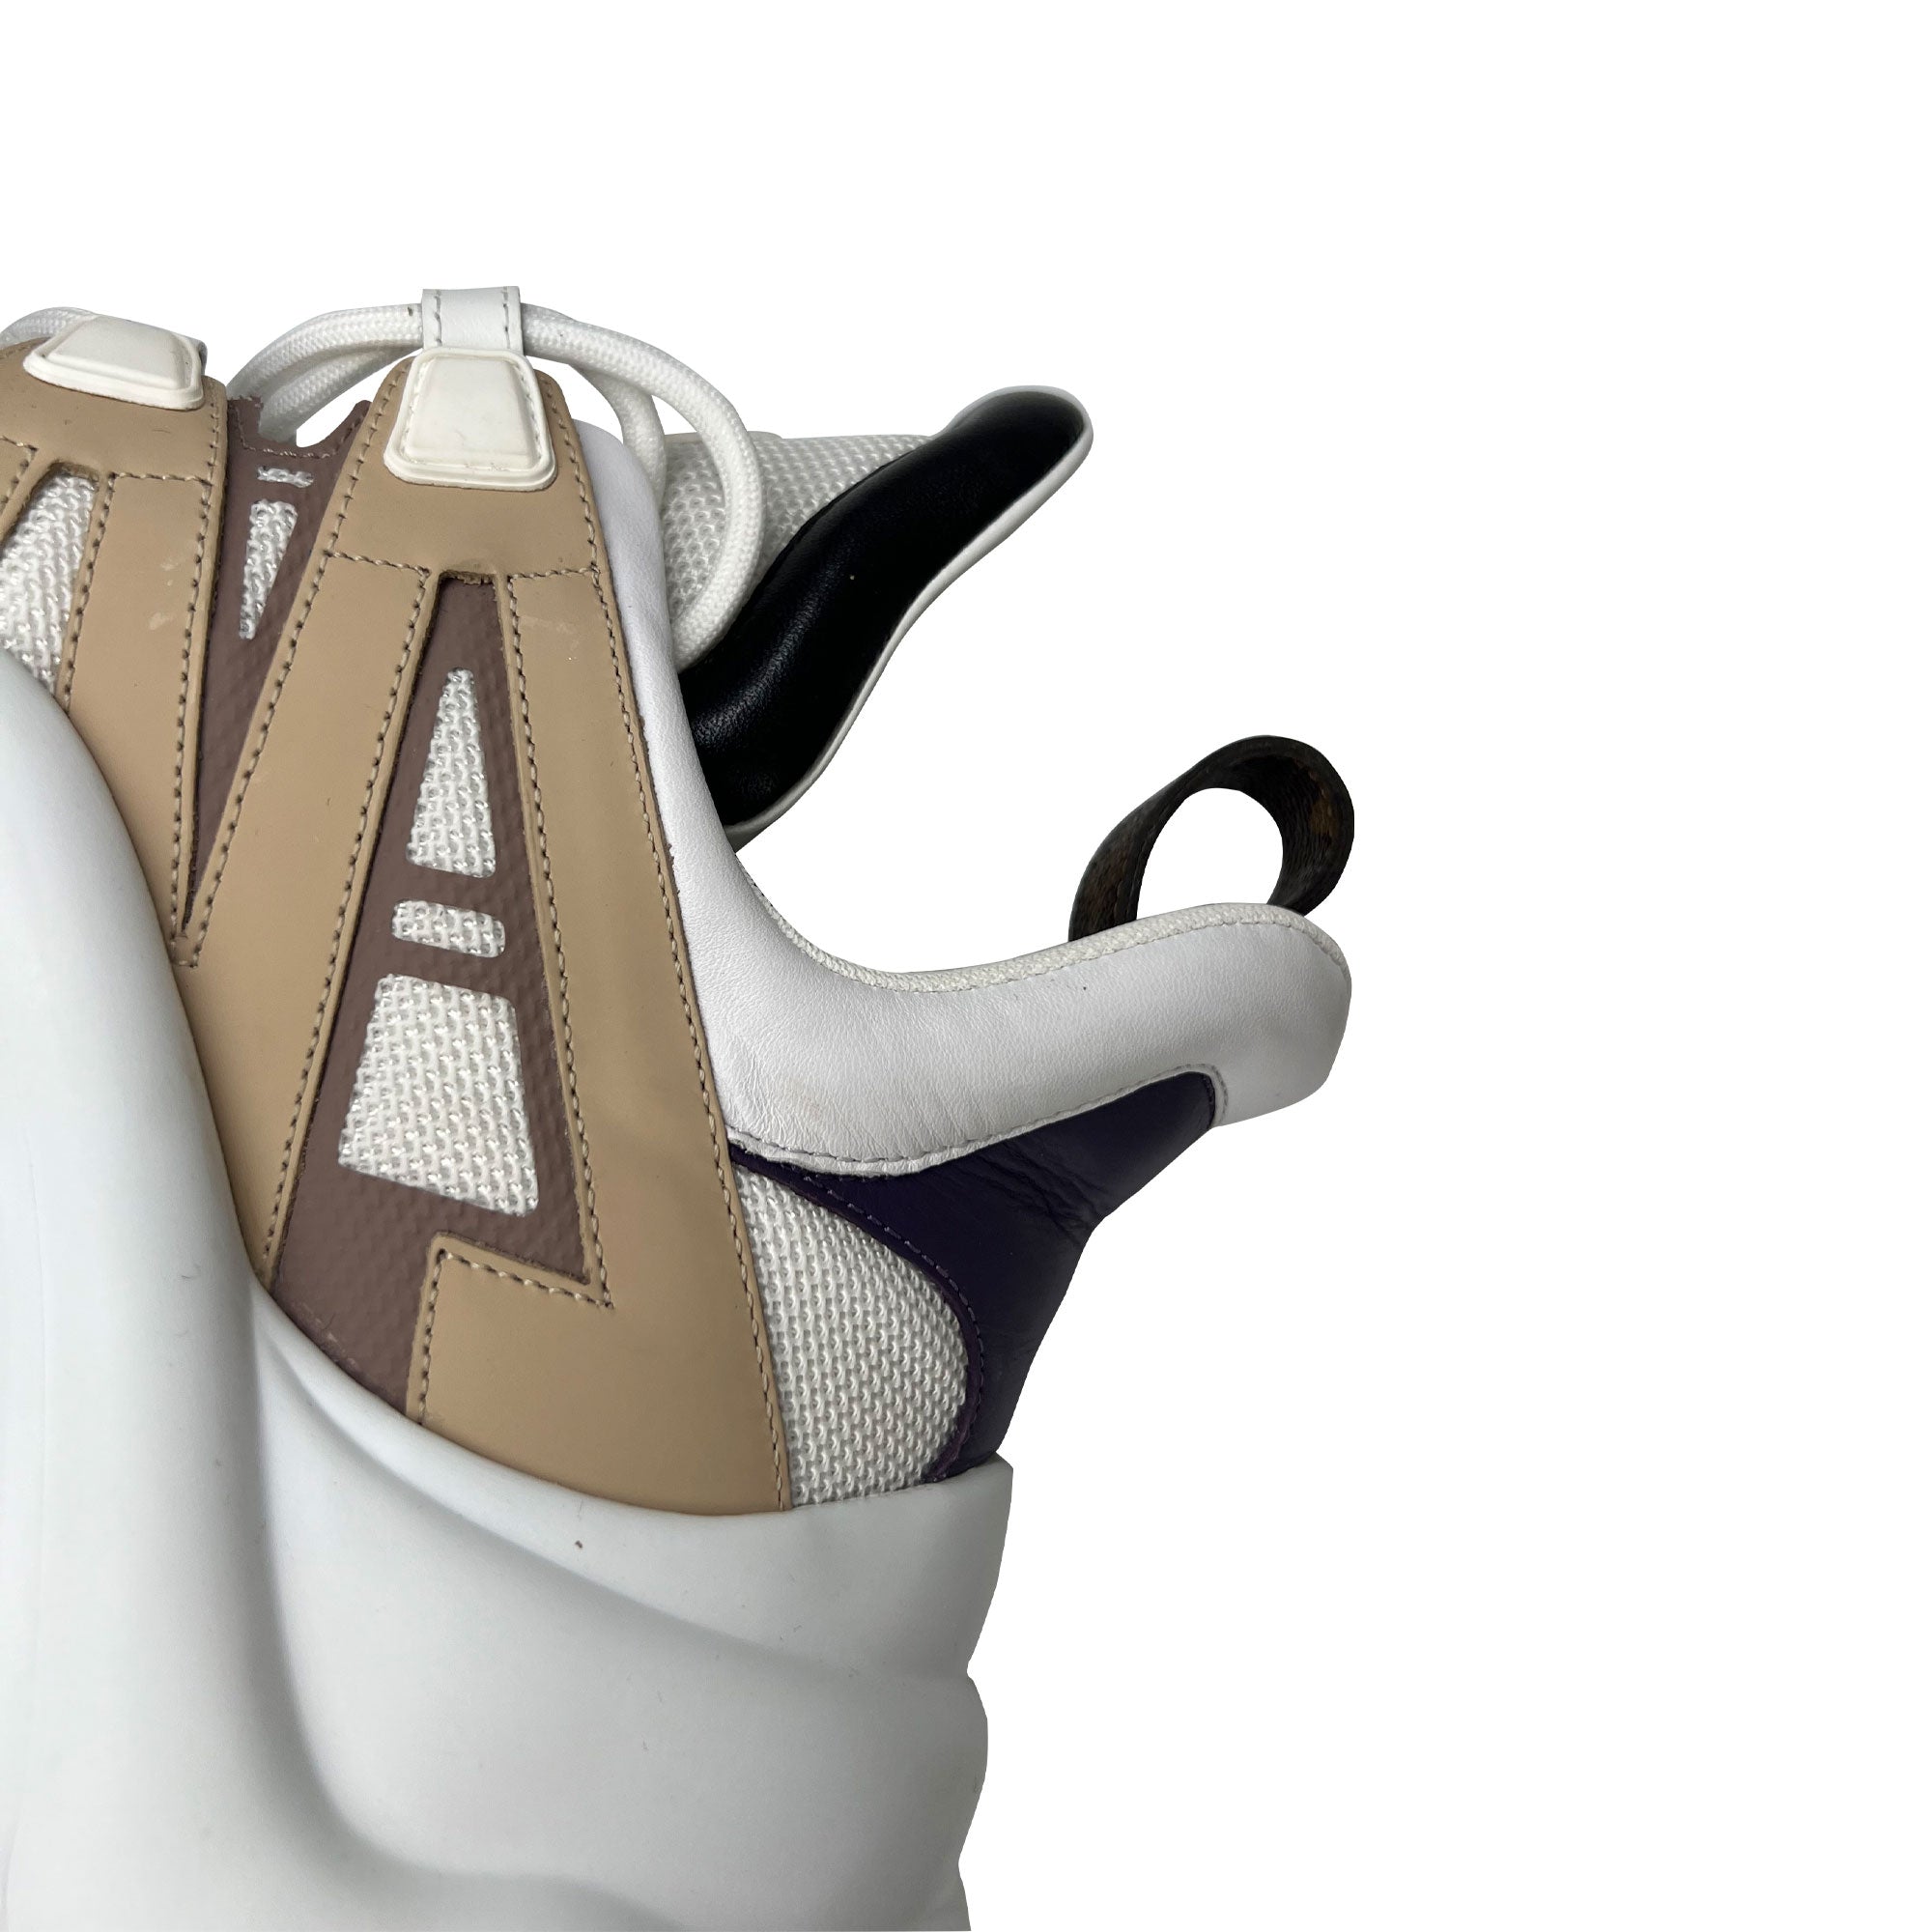 Louis Vuitton LV Archlight sneaker